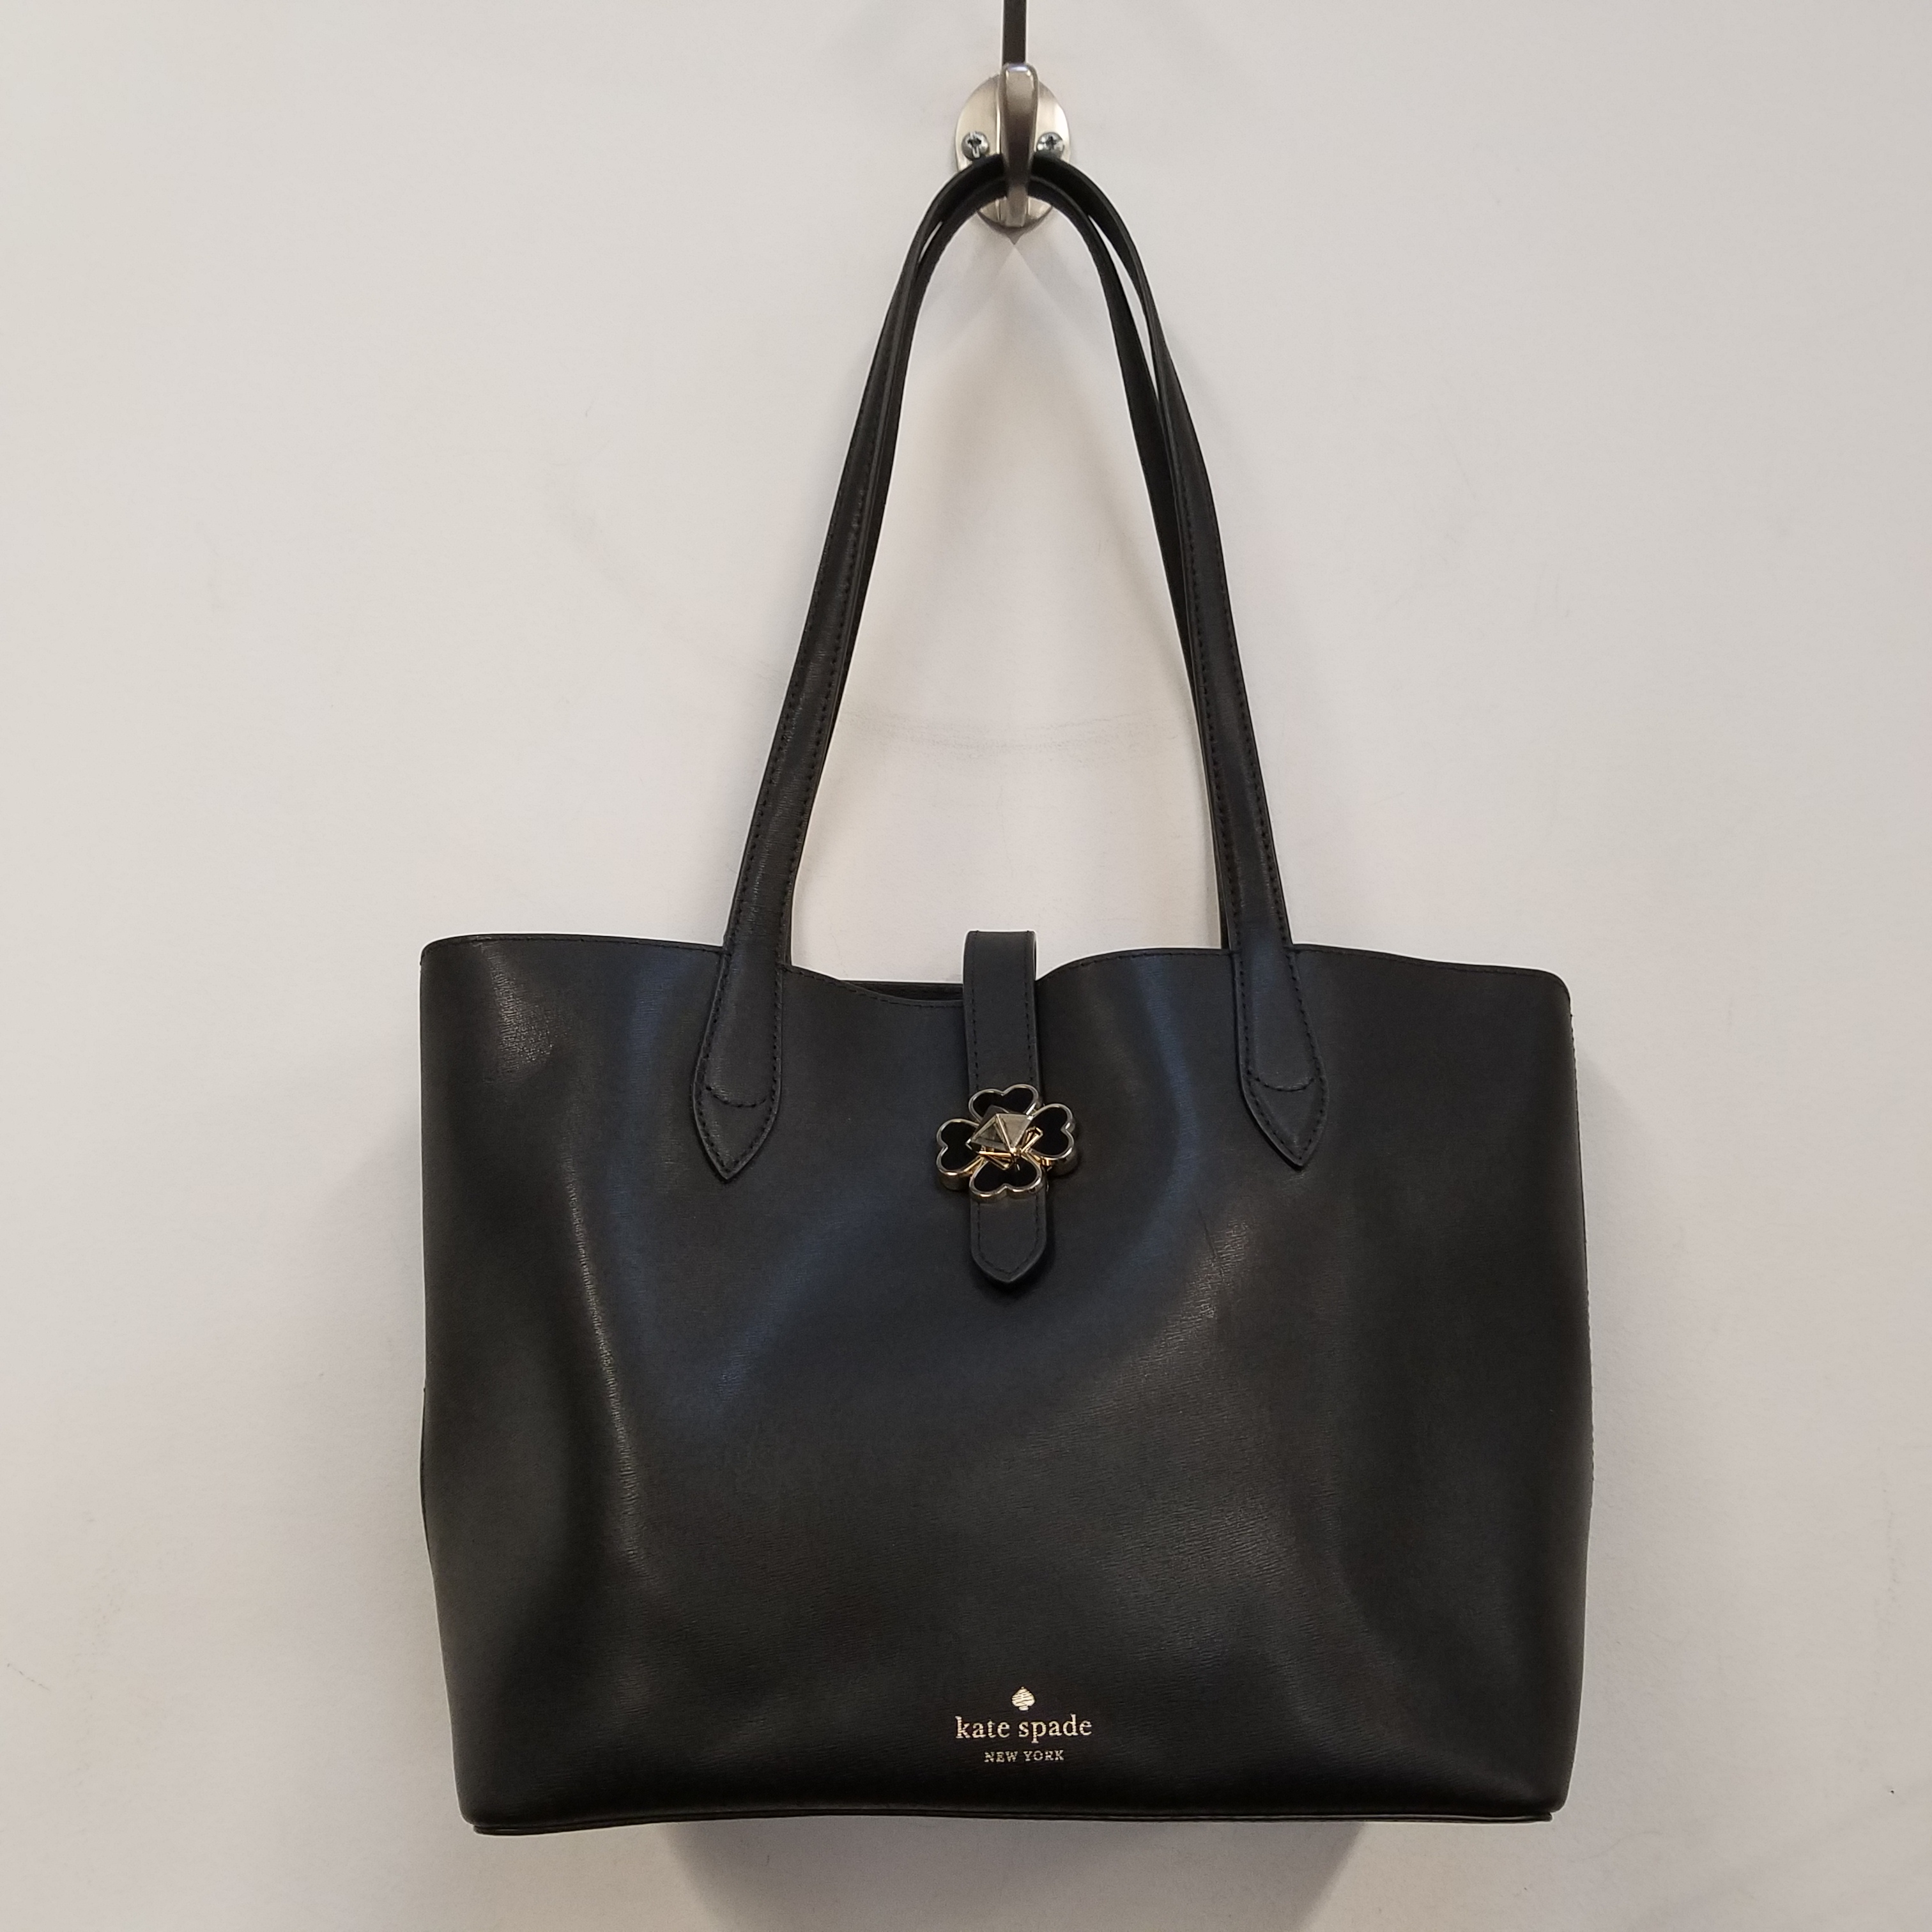 Buy the Kate Spade New York Kaci Small Tote Bag | GoodwillFinds